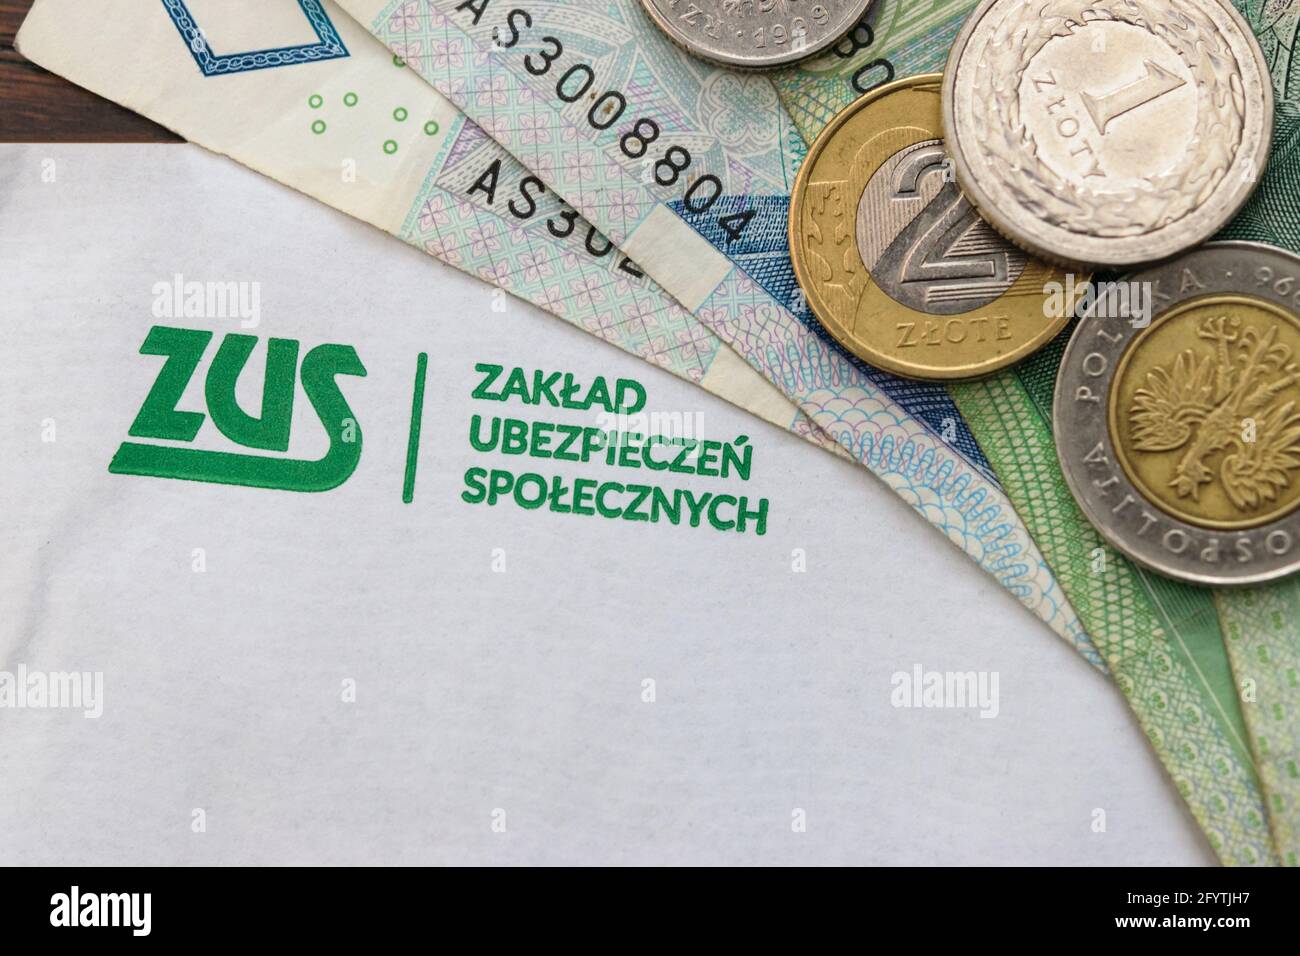 Letter from ZUS (Zaklad Ubezpieczen Spolecznych) - Polish National Social Insurance Company and polish money Stock Photo